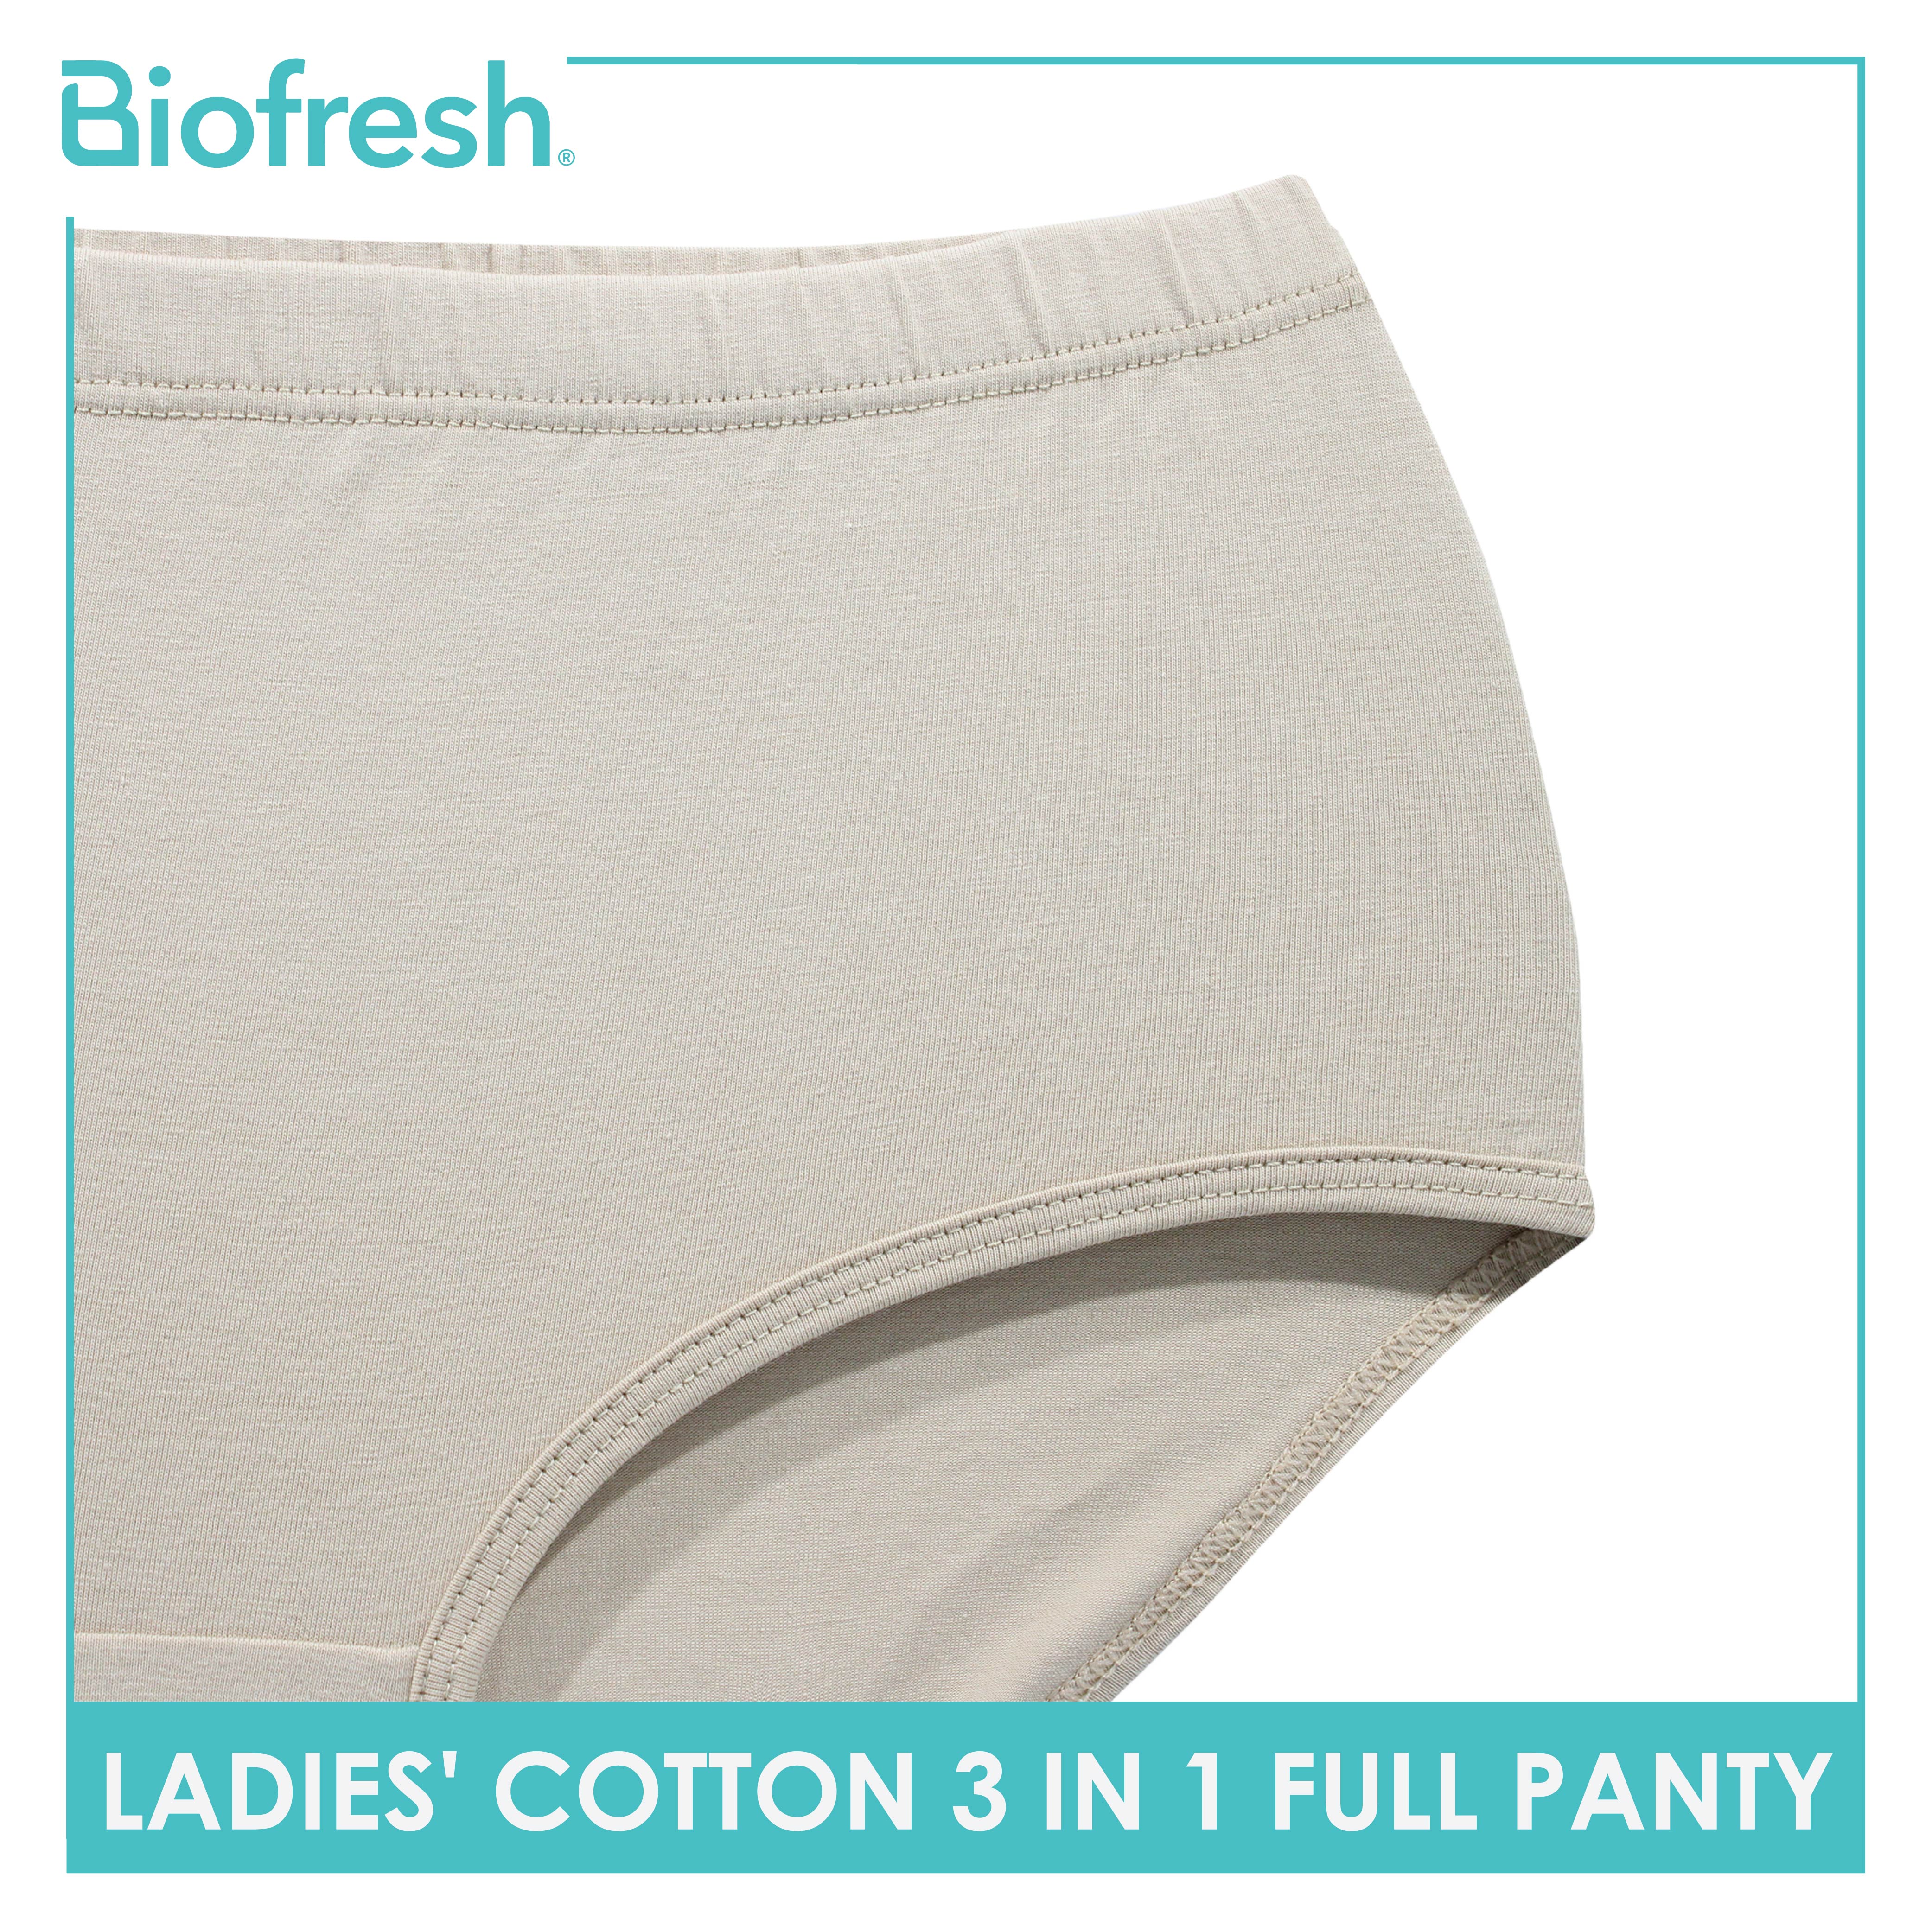 ♪Biofresh Ladies' Antimicrobial Cotton Rich Boyleg Panty 3 pieces